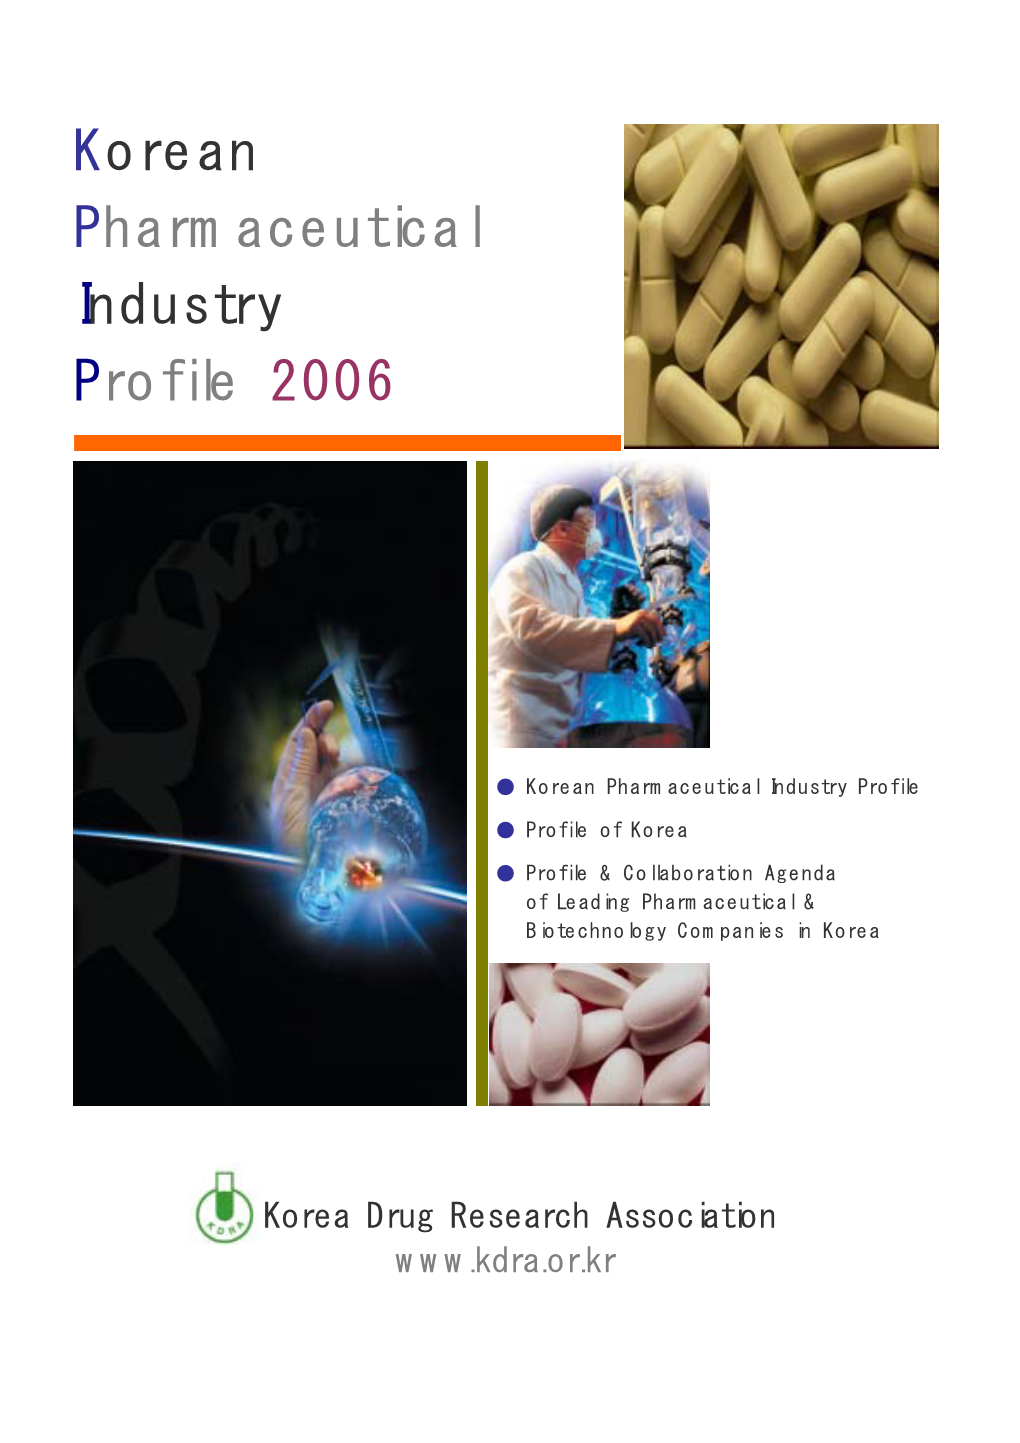 Korean Pharmaceutical Industry Profile 2006